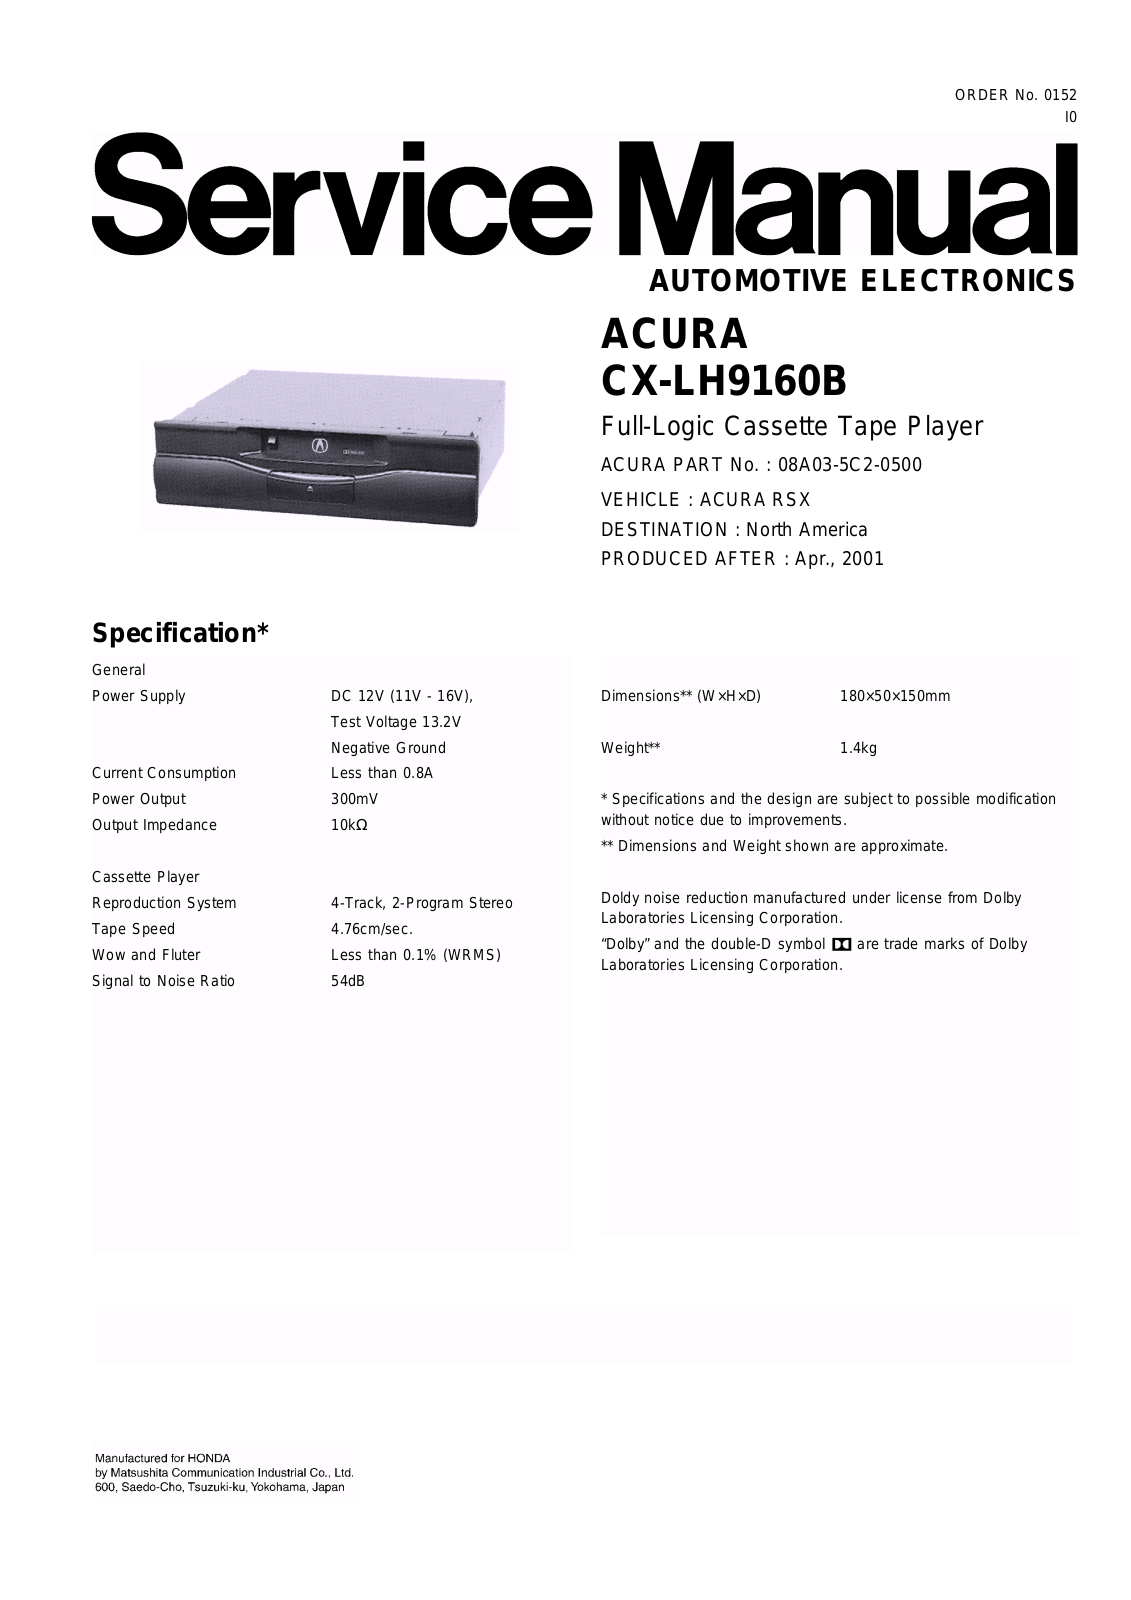 Honda 08A03-5C2-0500, CX-LH9160B Service Manual